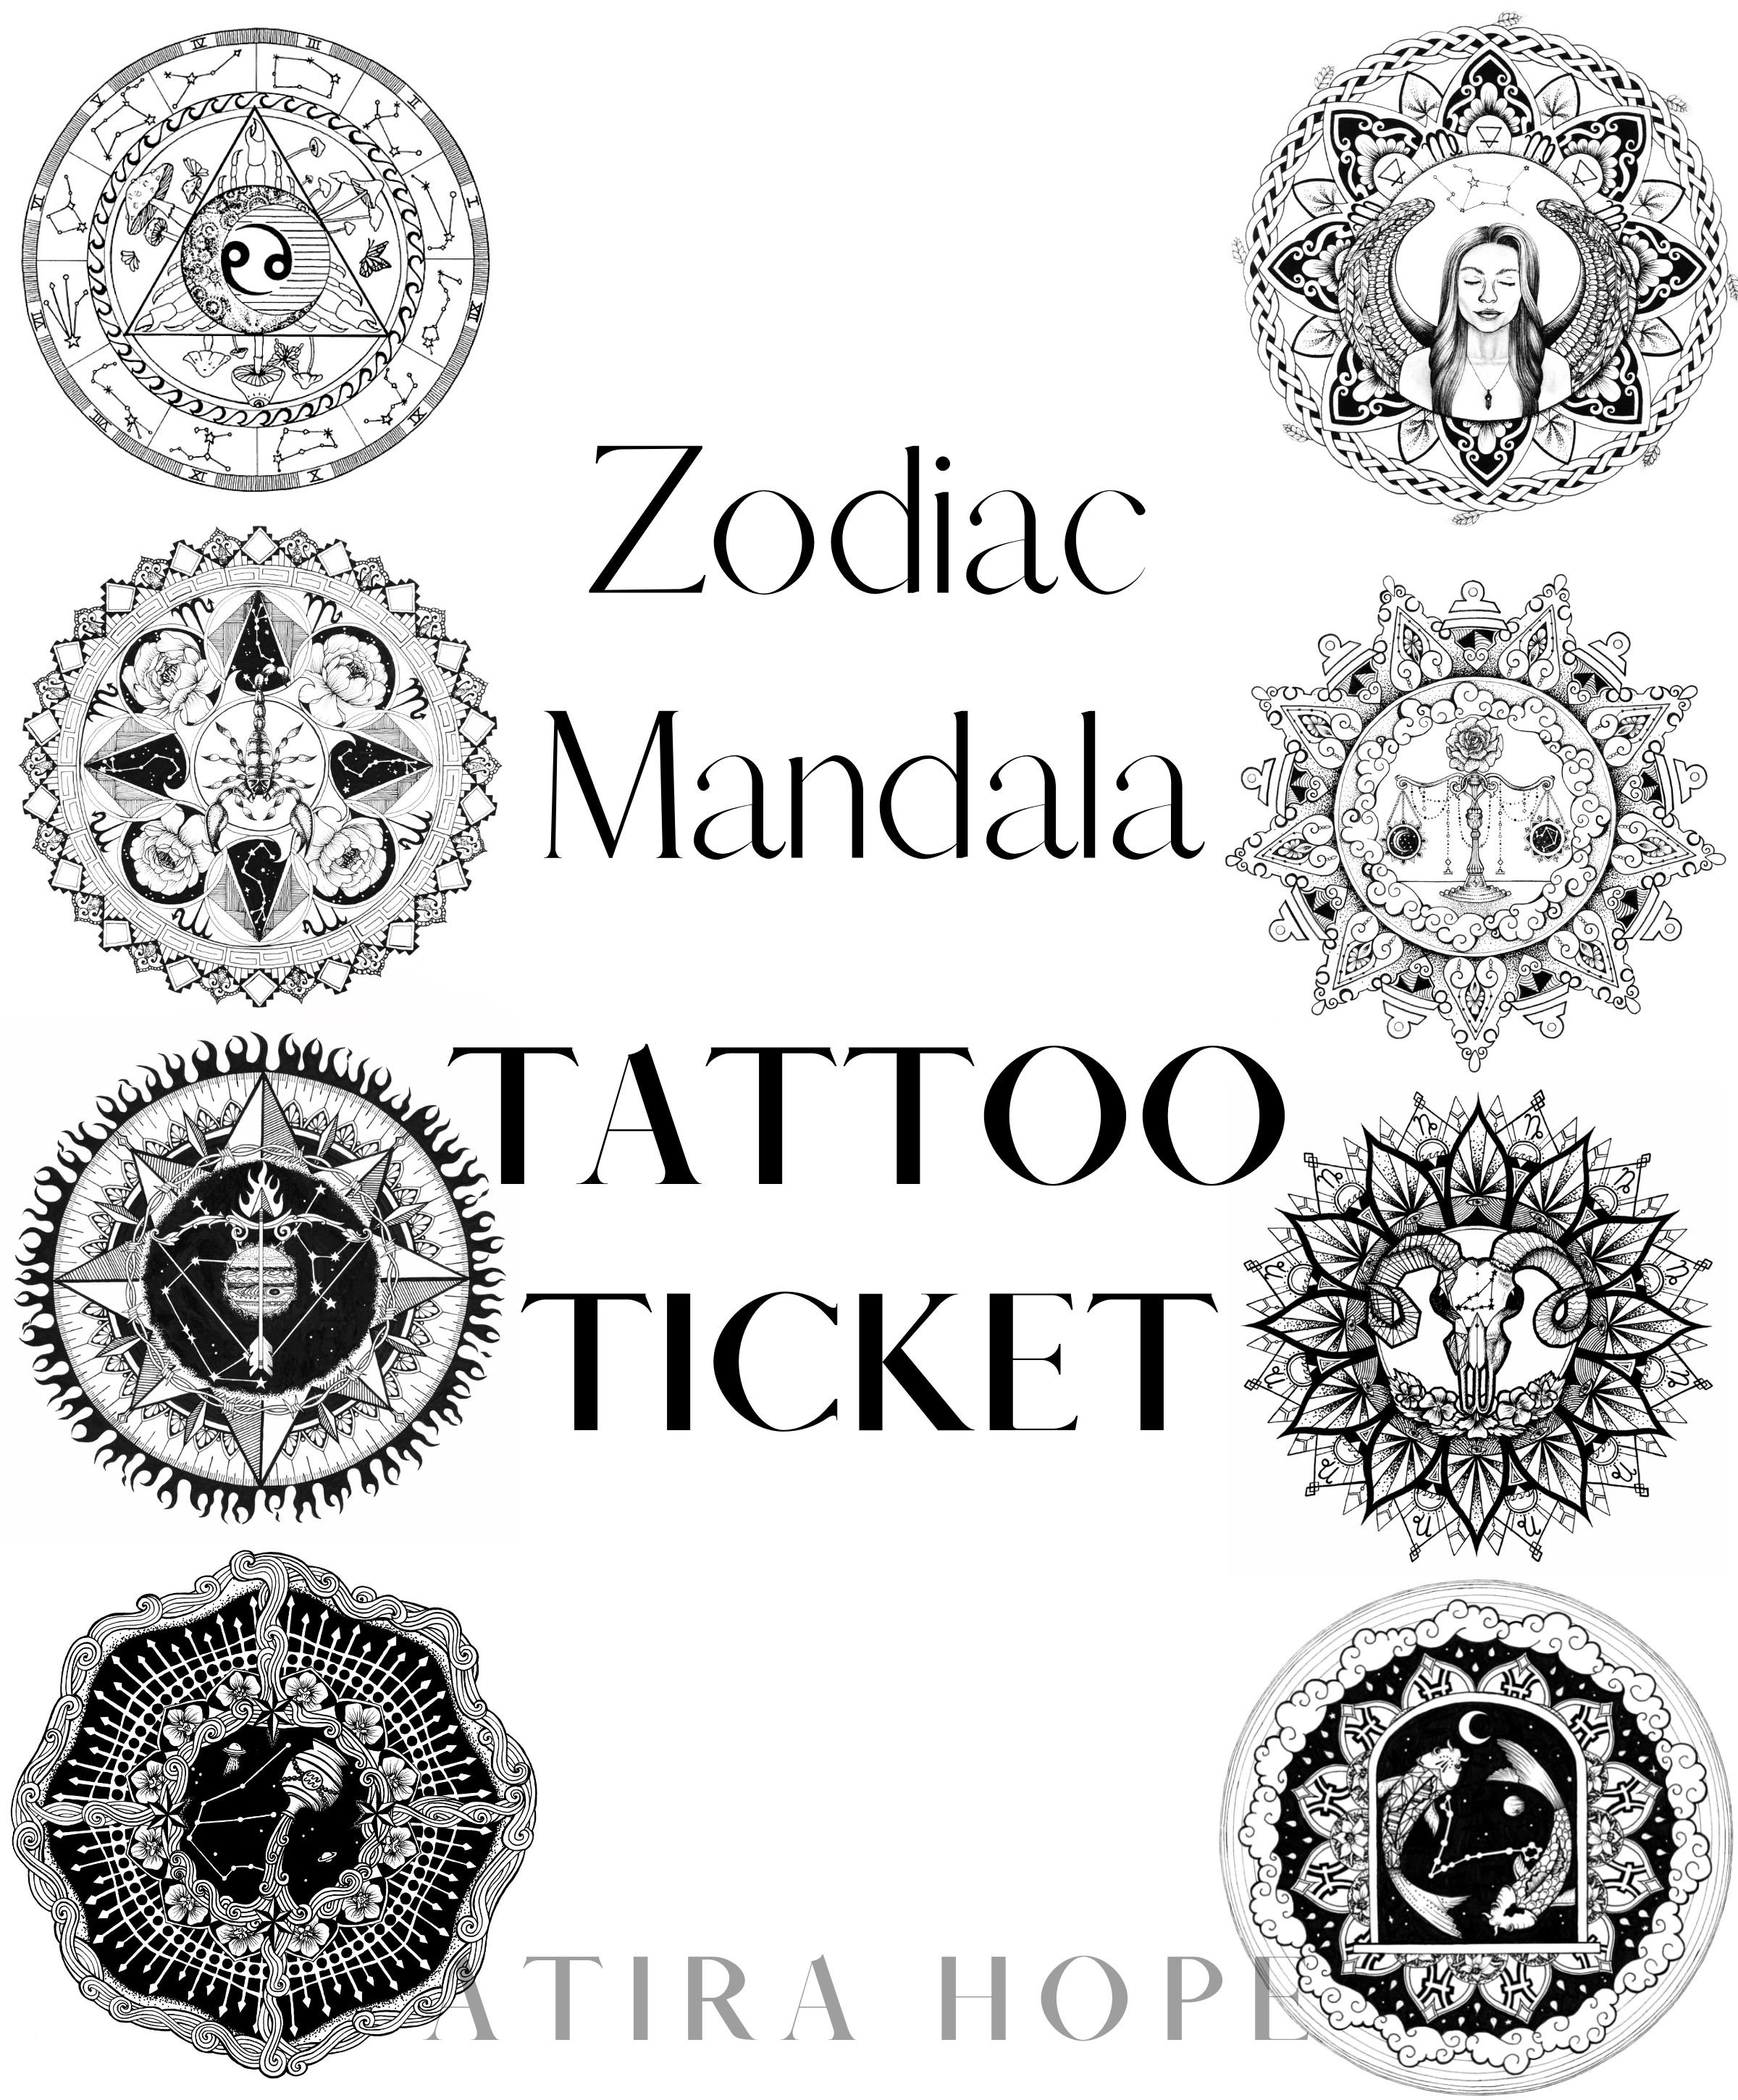 Zodiac Mandala Tattoo Ticket Cancer Virgo Libra Scorpio - Etsy Australia